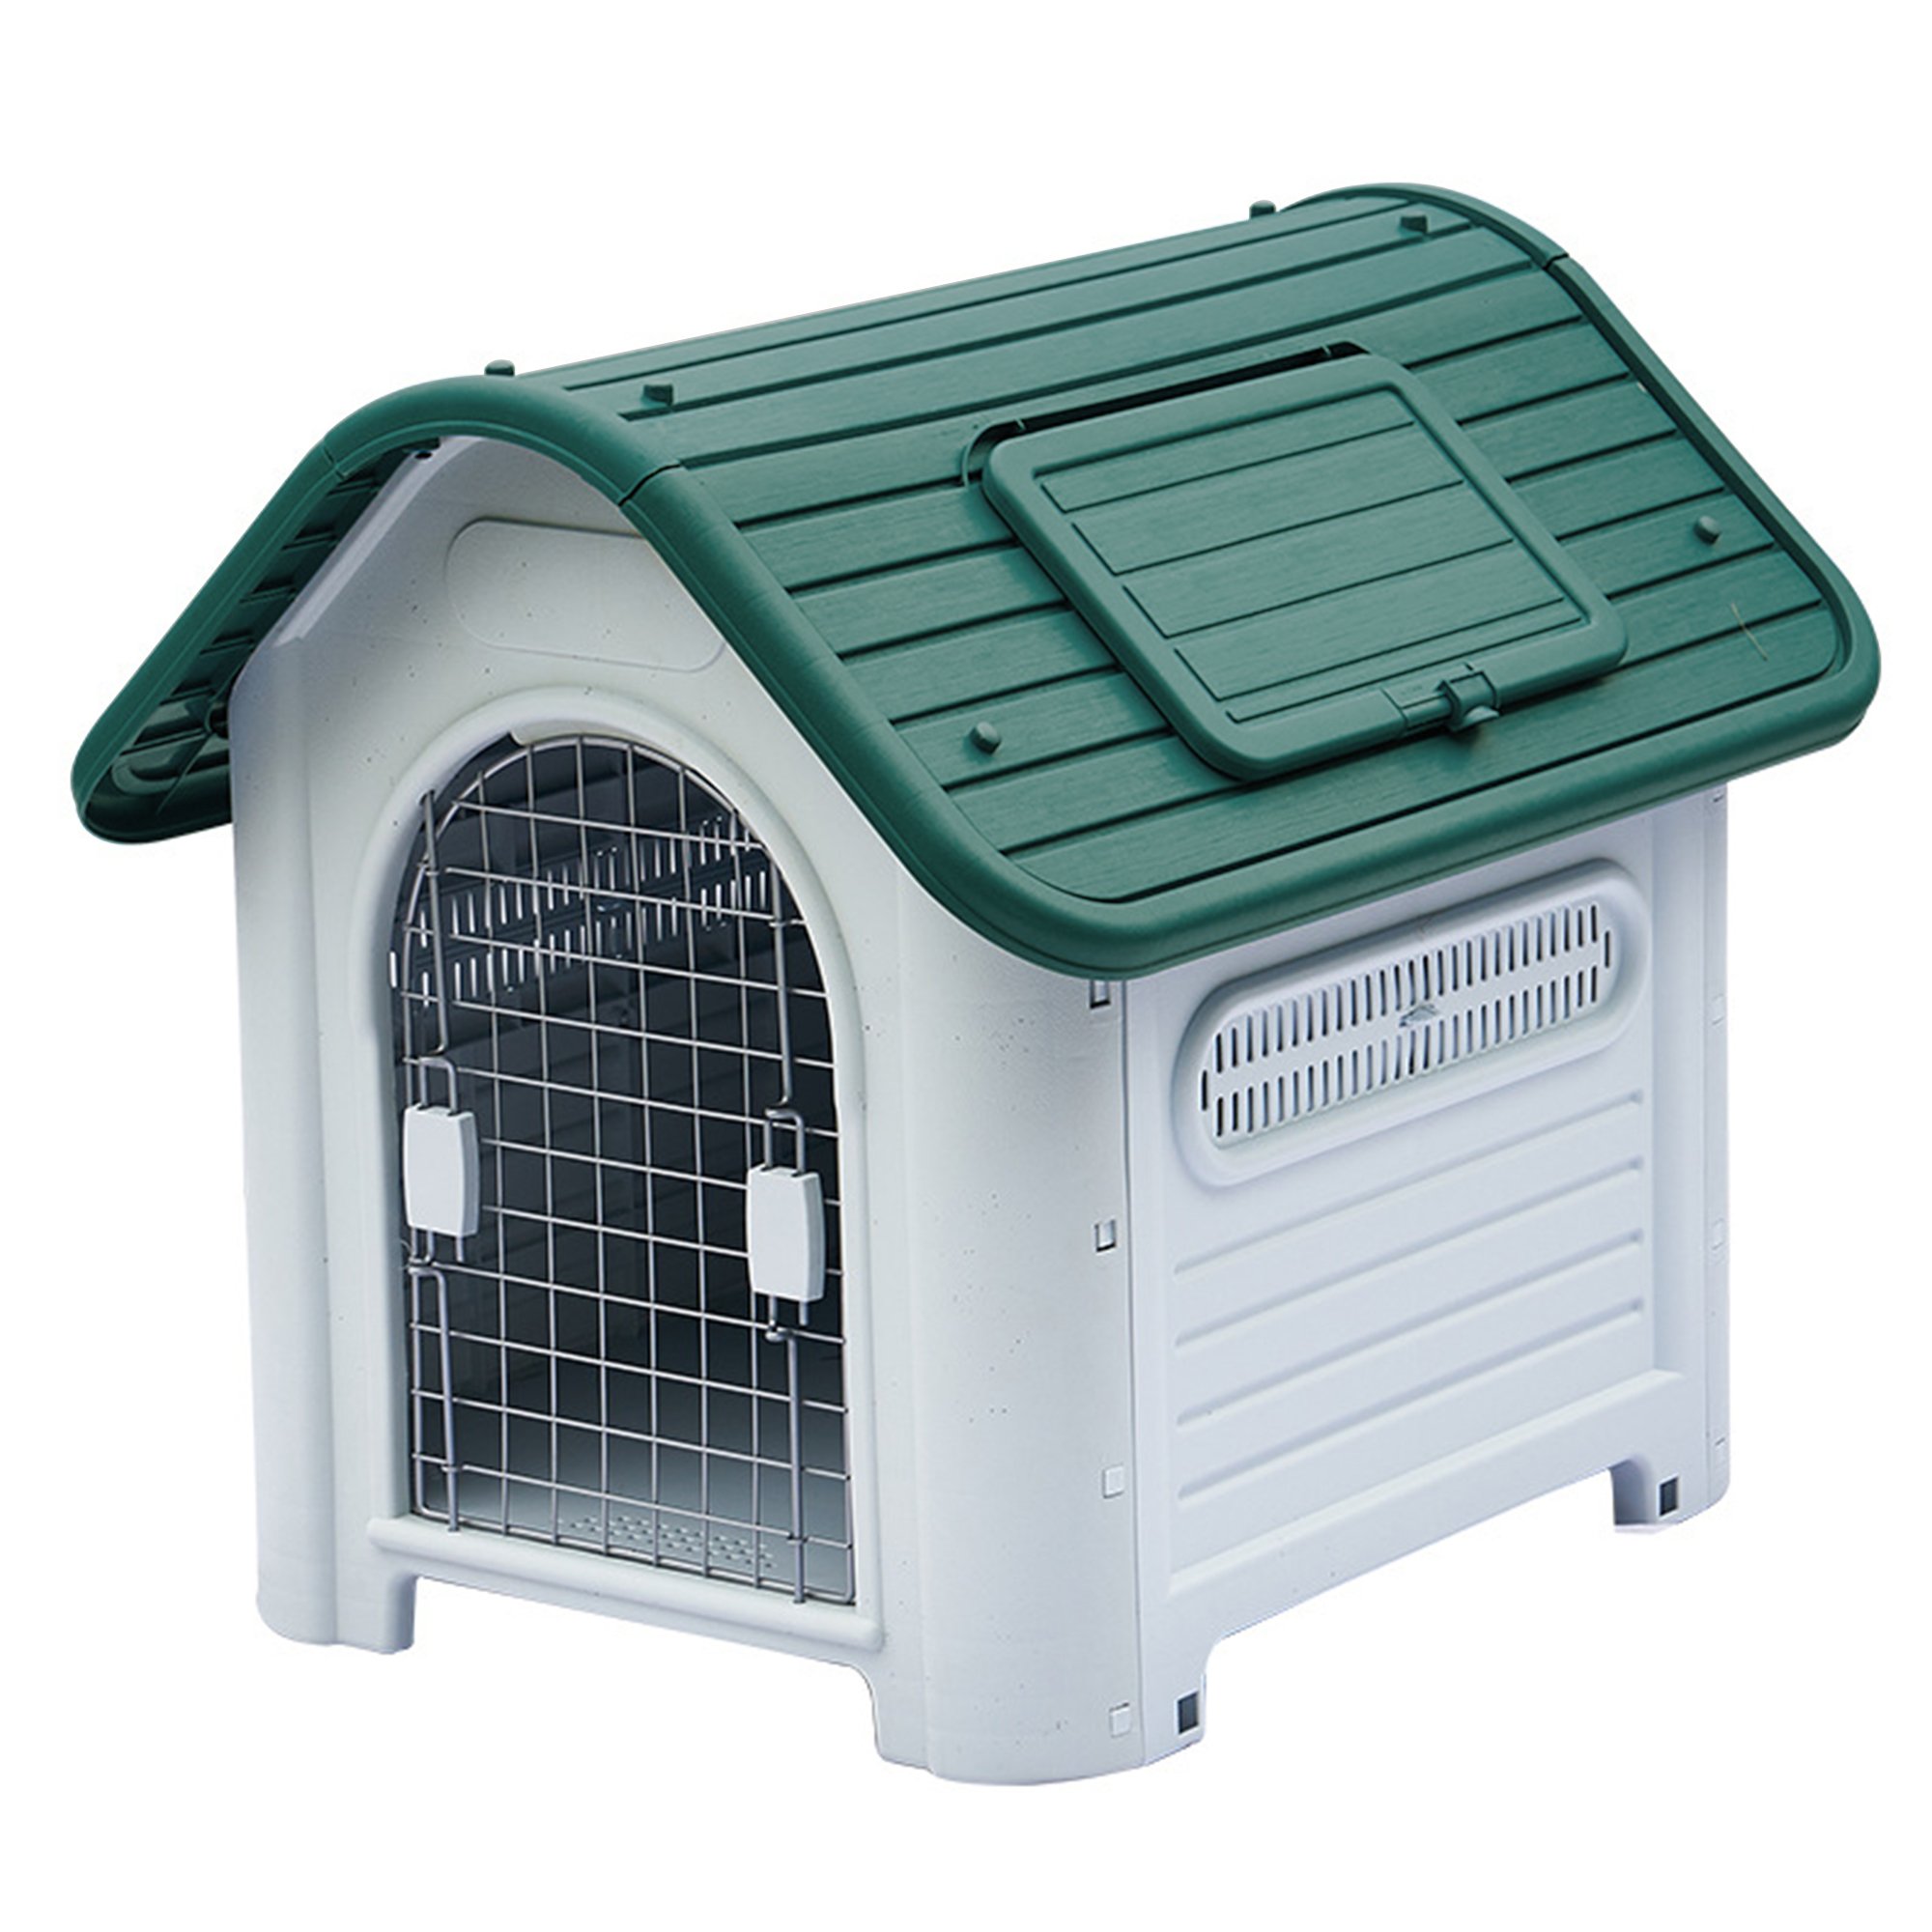 Plastic Waterproof Dog House Kennel - S/M